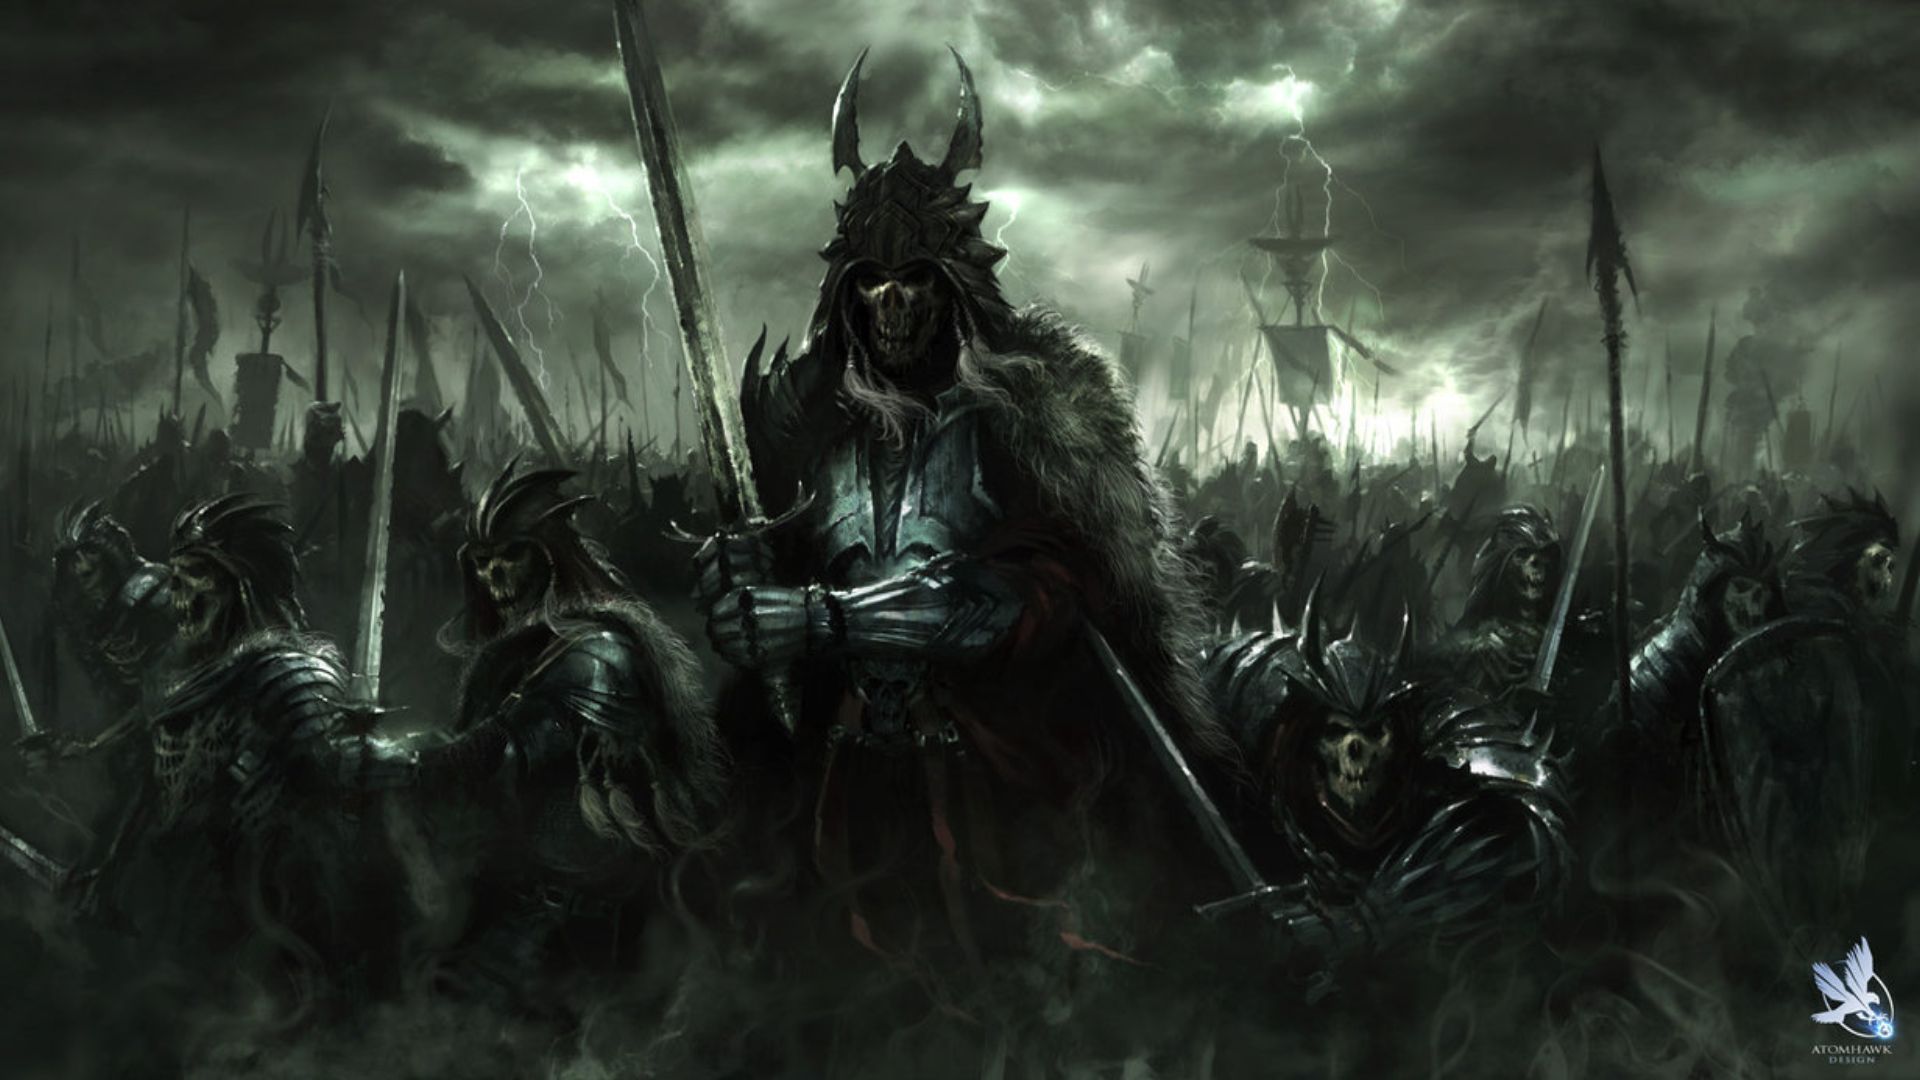  art dark horror demon skull warrior wepons army wallpaper background